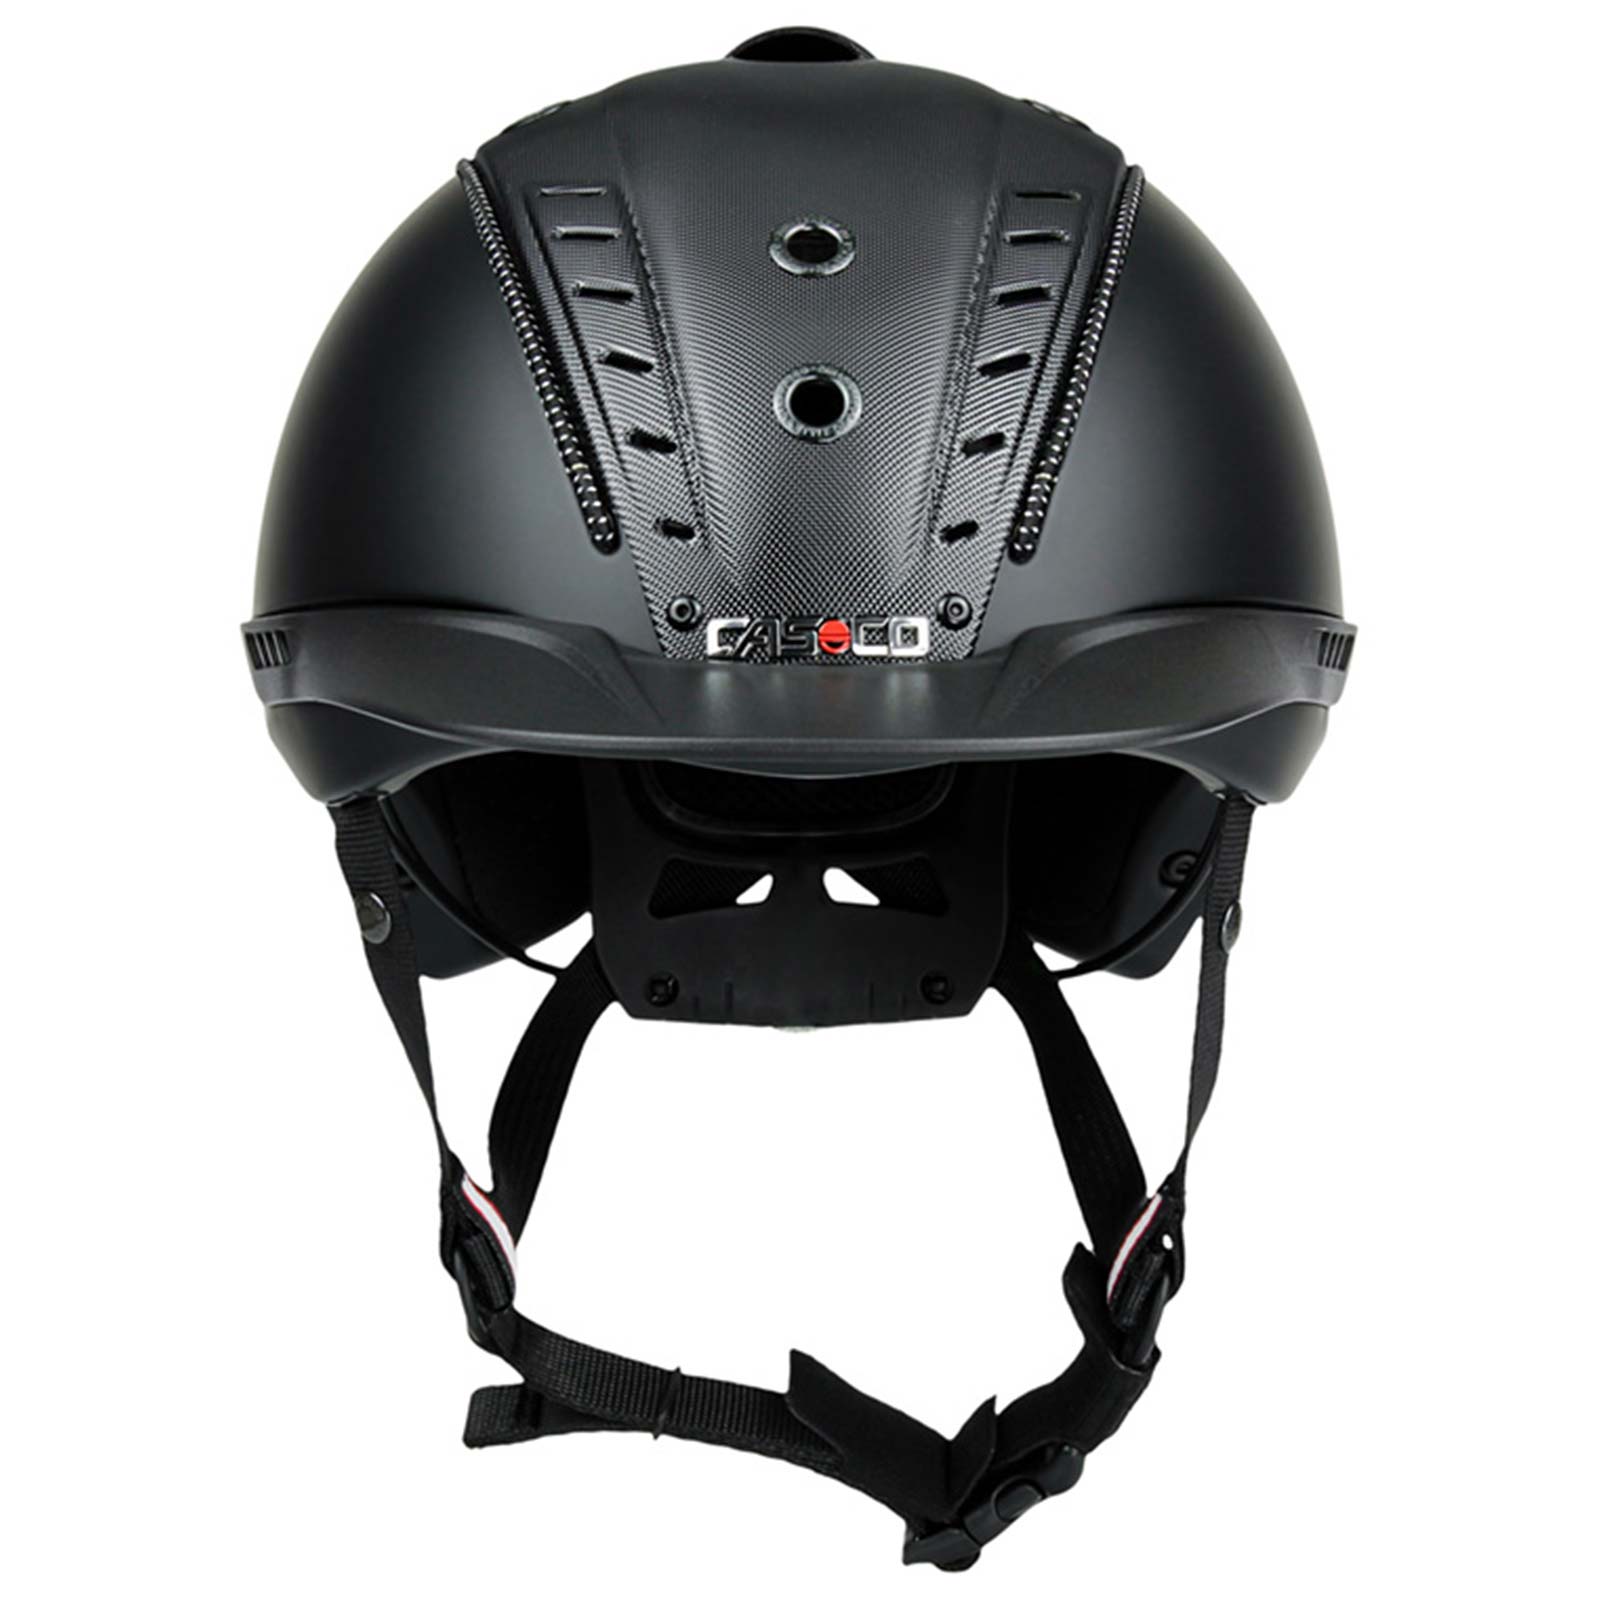 Casco MISTRALL 2 Edition Riding Helmet black S - M